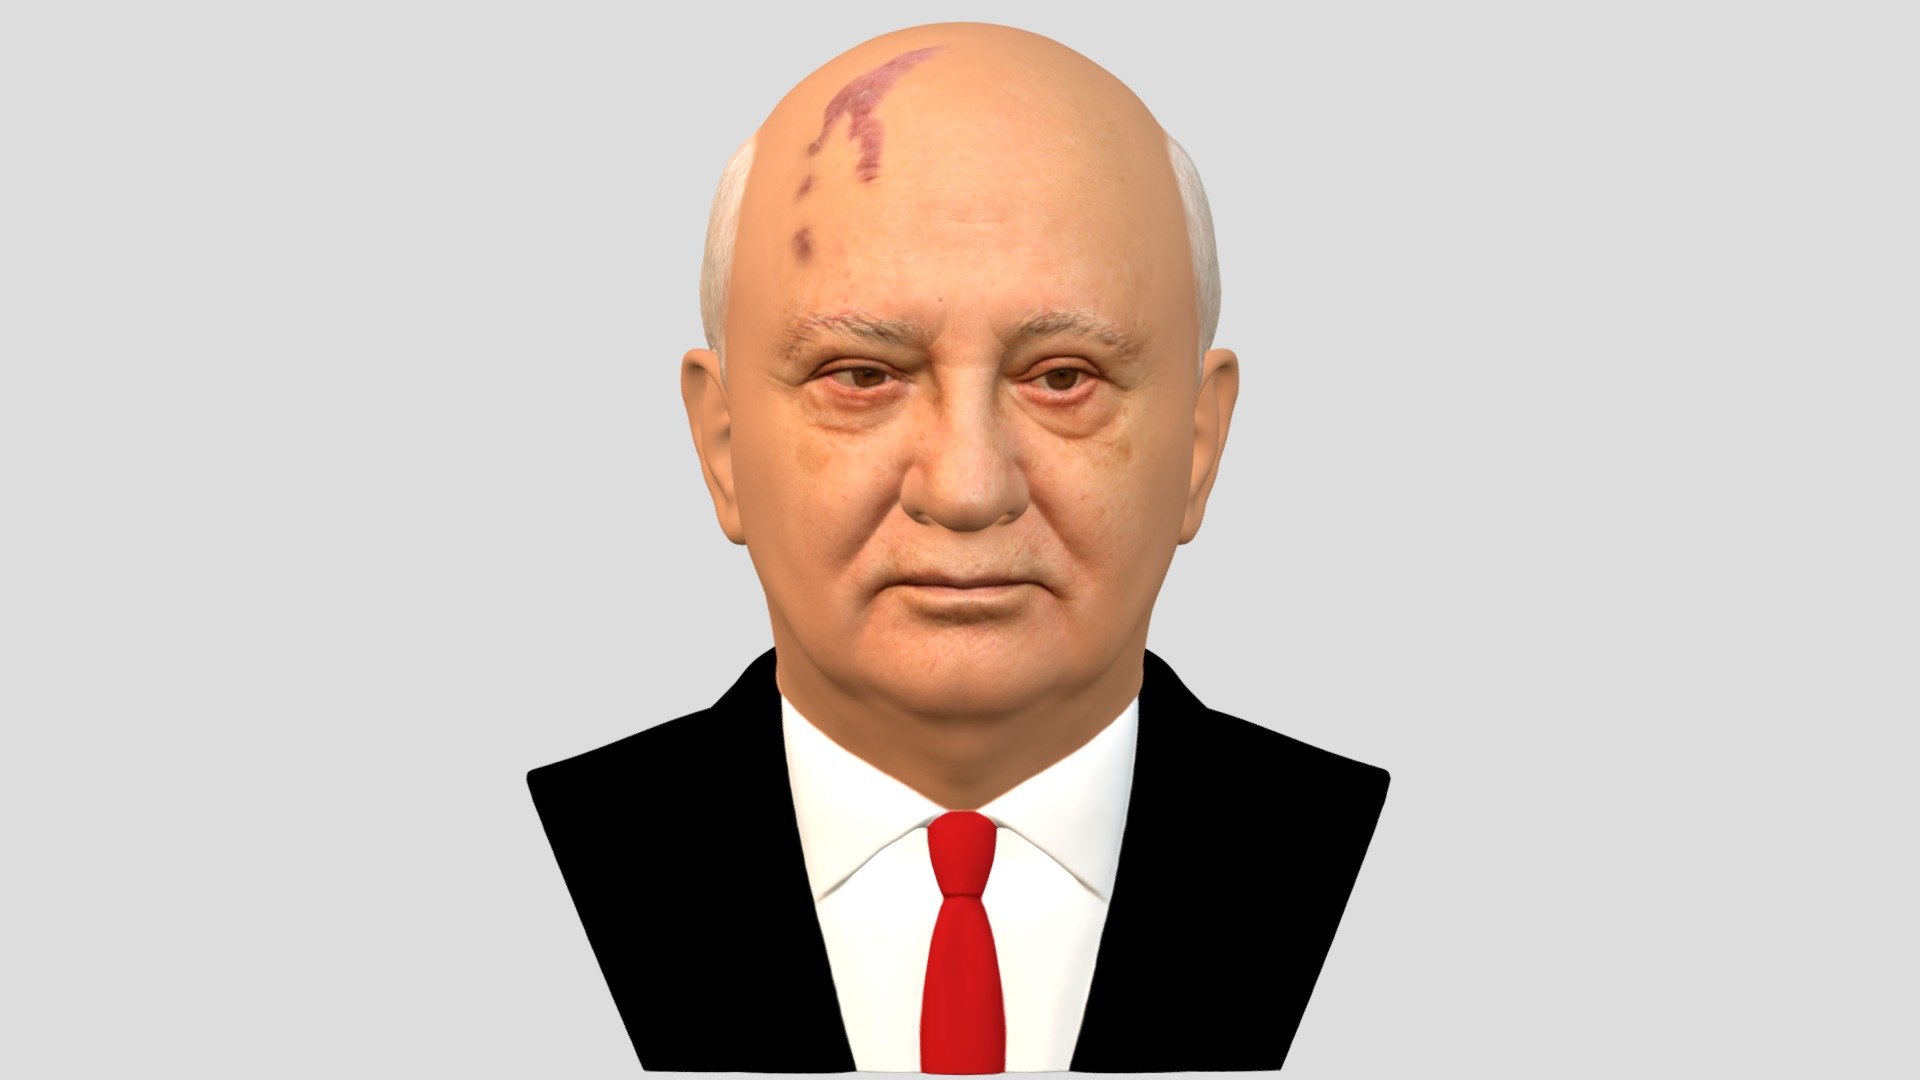 Mikhail Gorbachev bust full color 3D printing